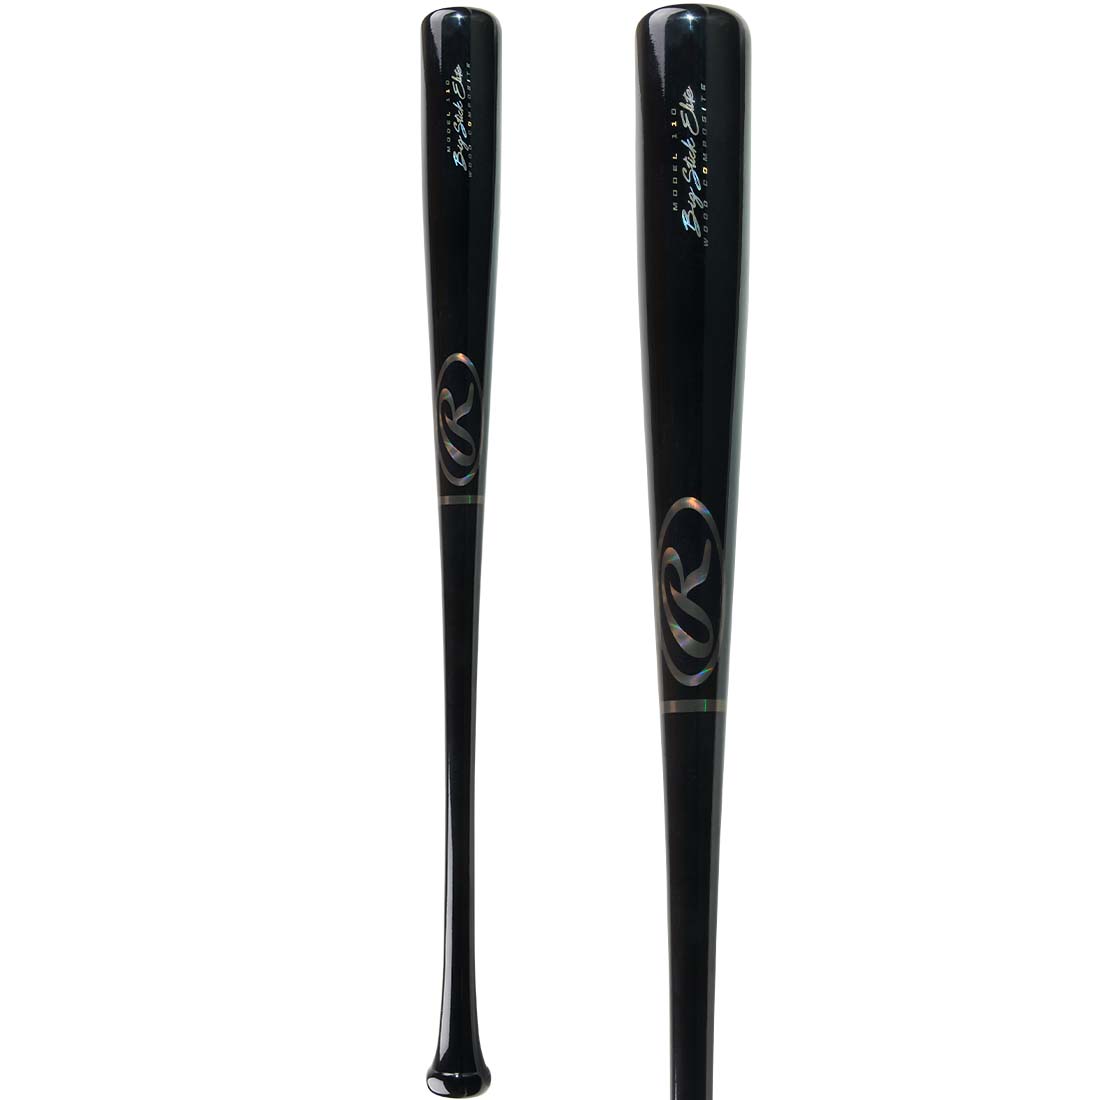  Rawlings, Big Stick Elite Wood Baseball Bat, I13 Profile